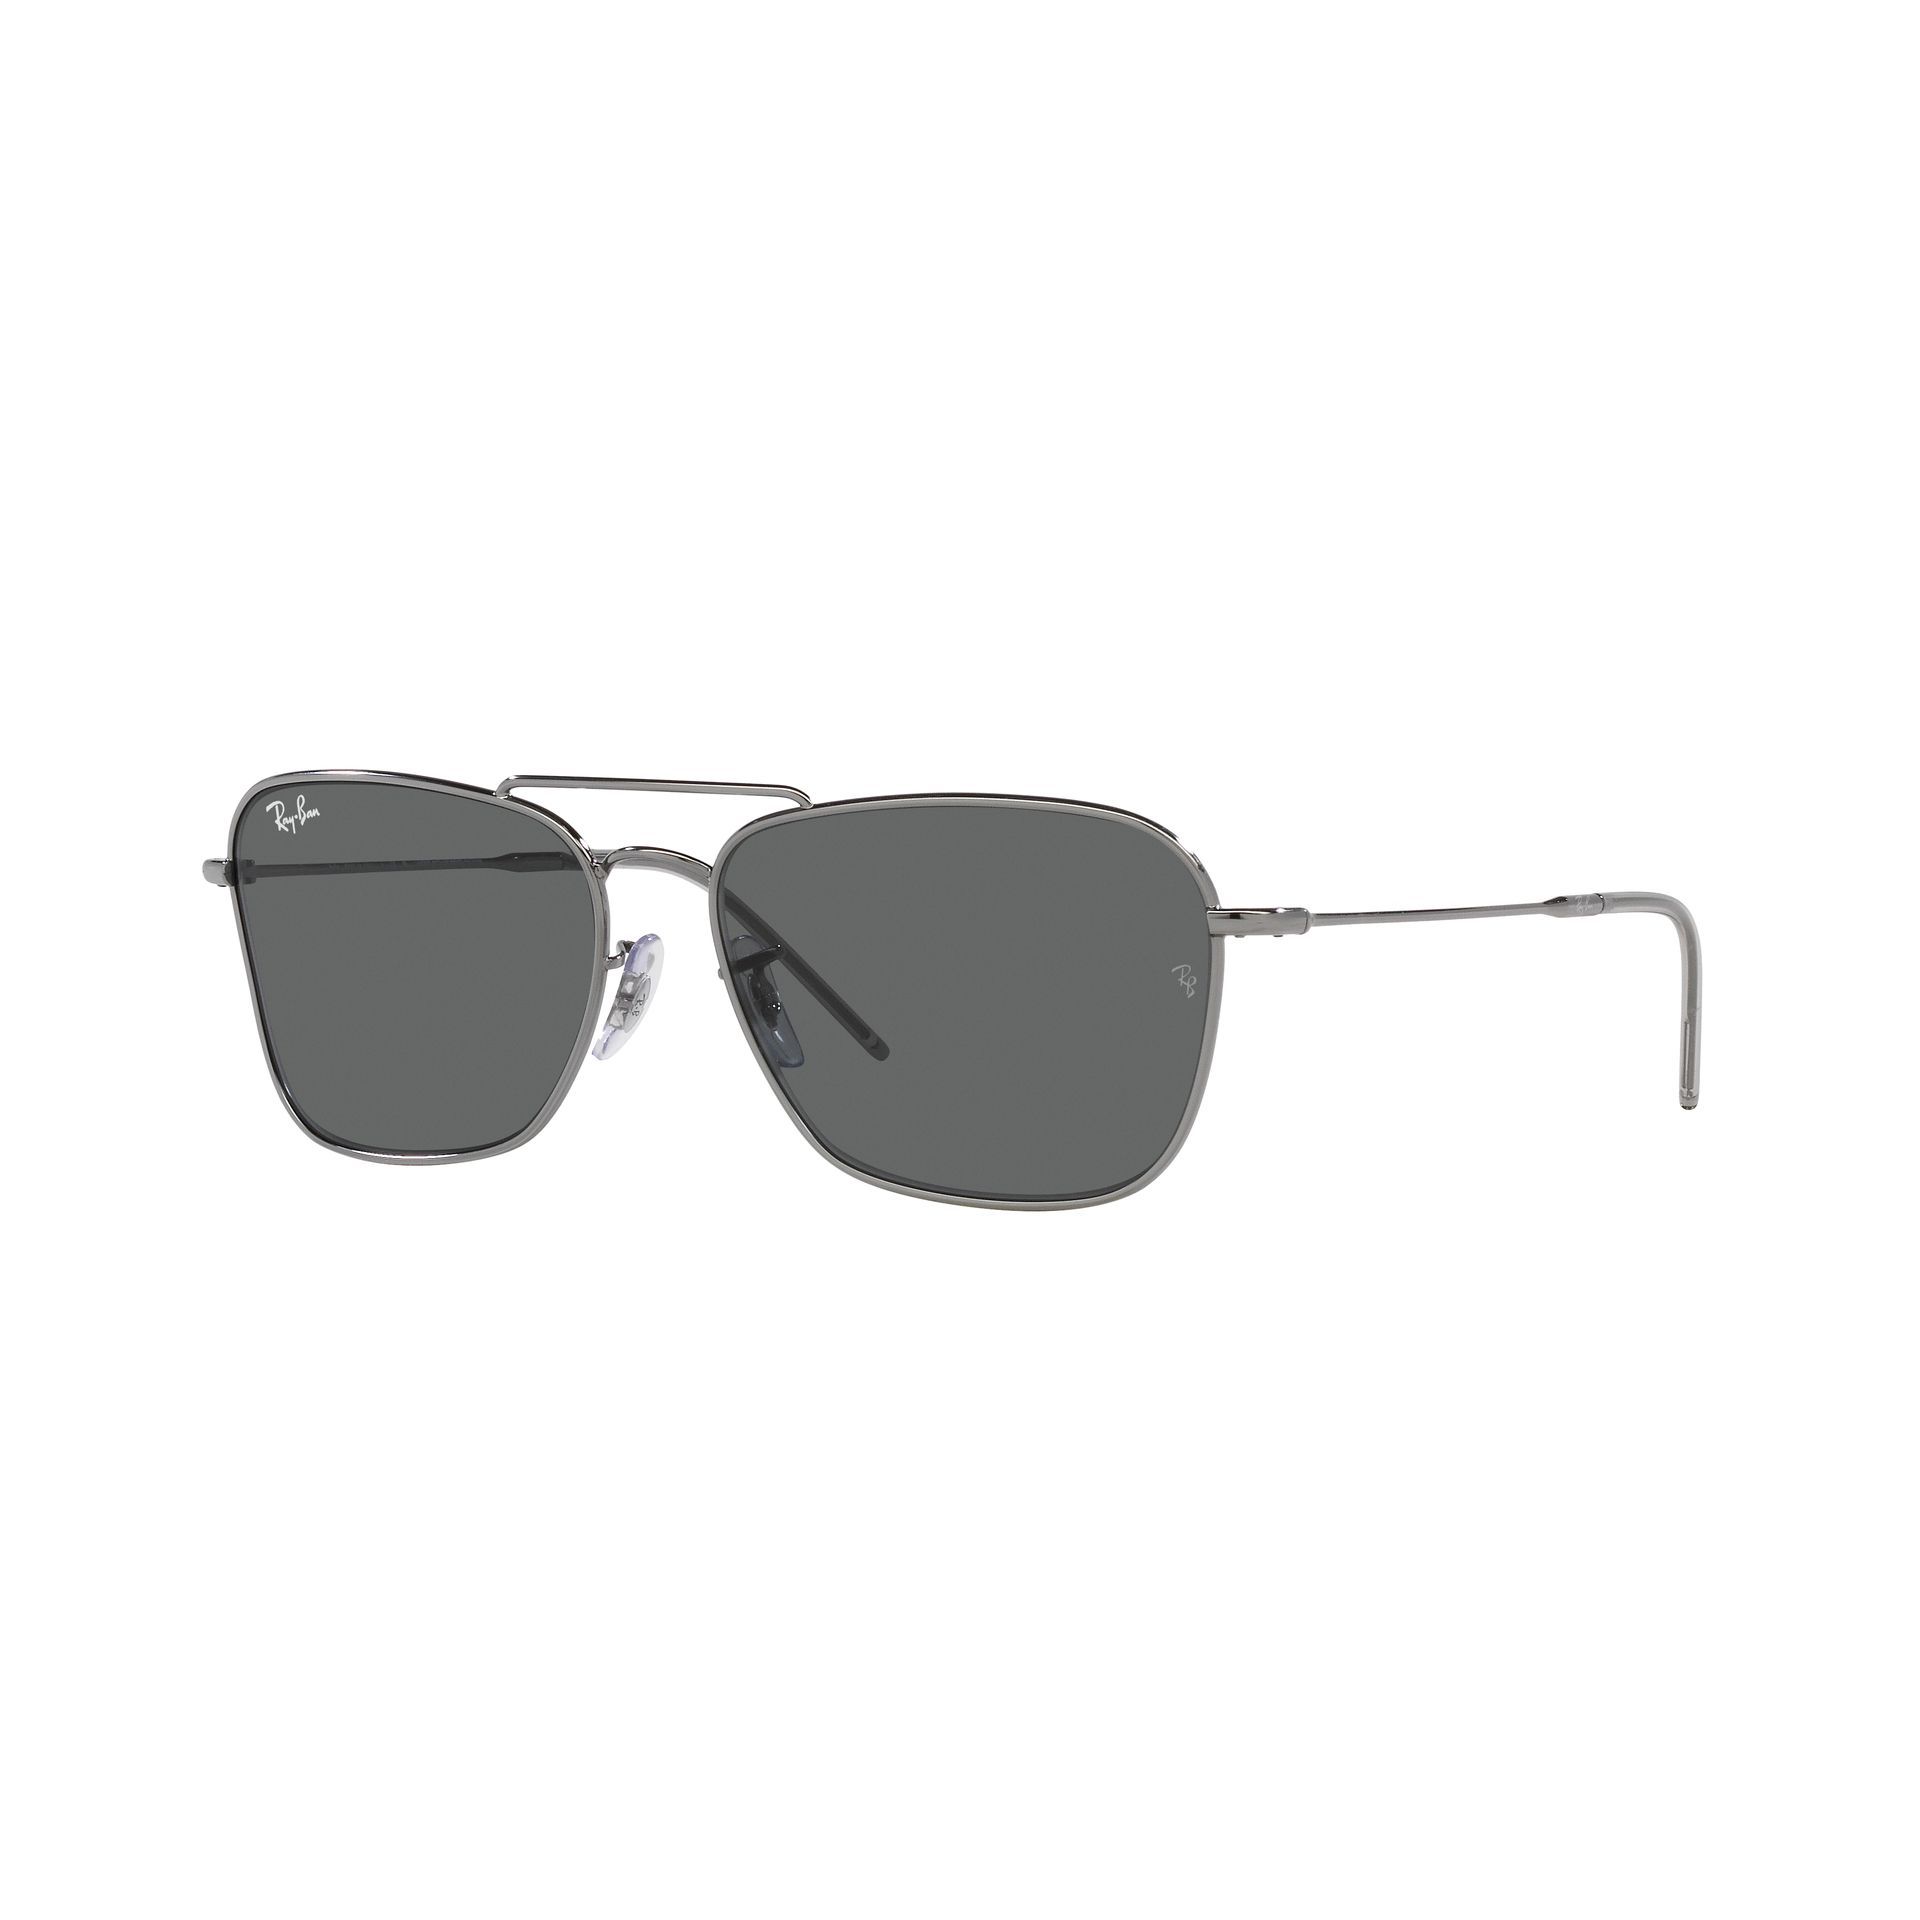 Caravan Reverse  Sunglasses RBR0102S 004 GR - size 58